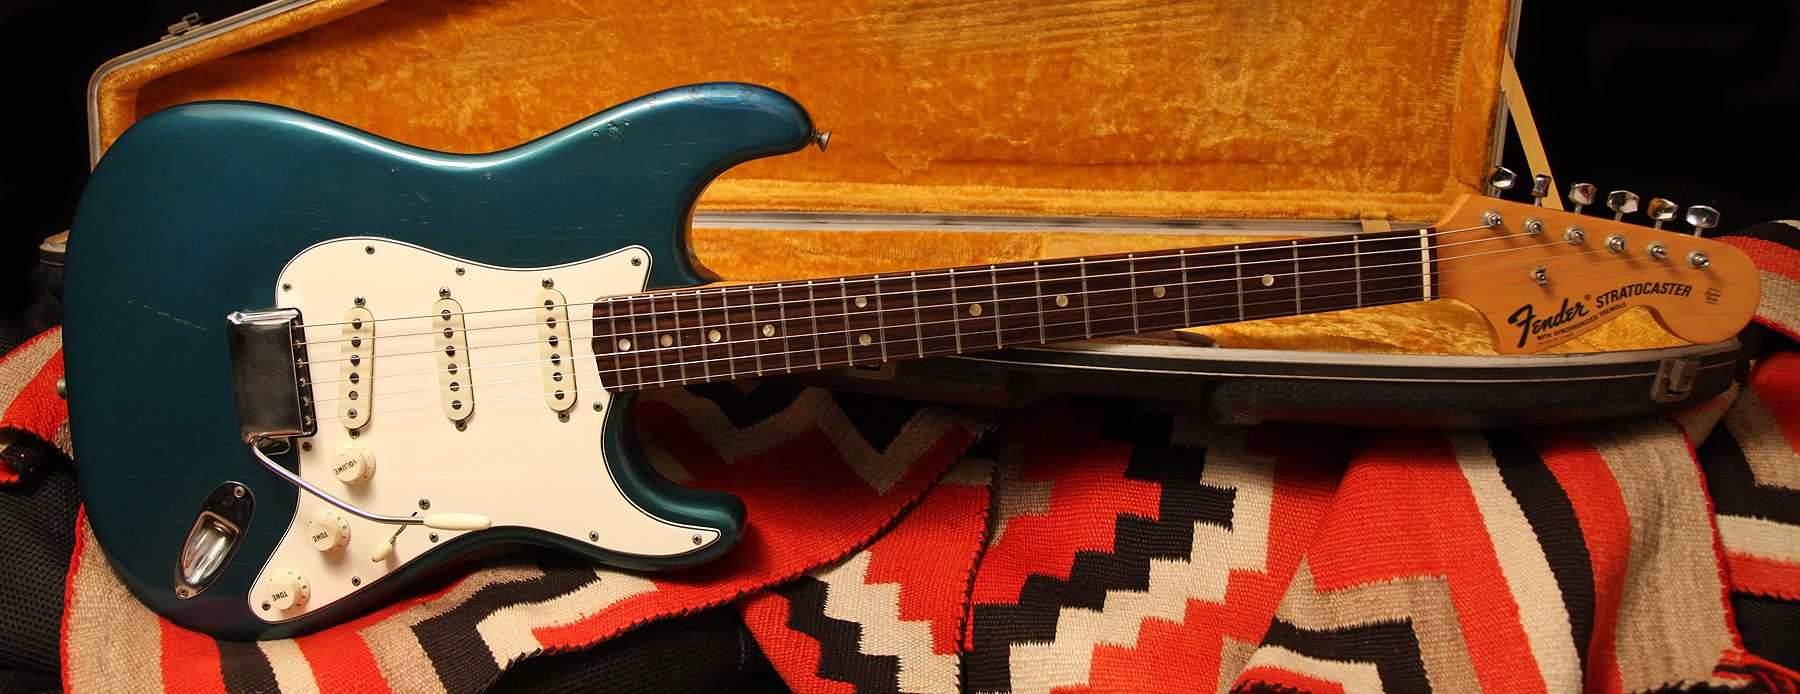 1968 Stratocaster